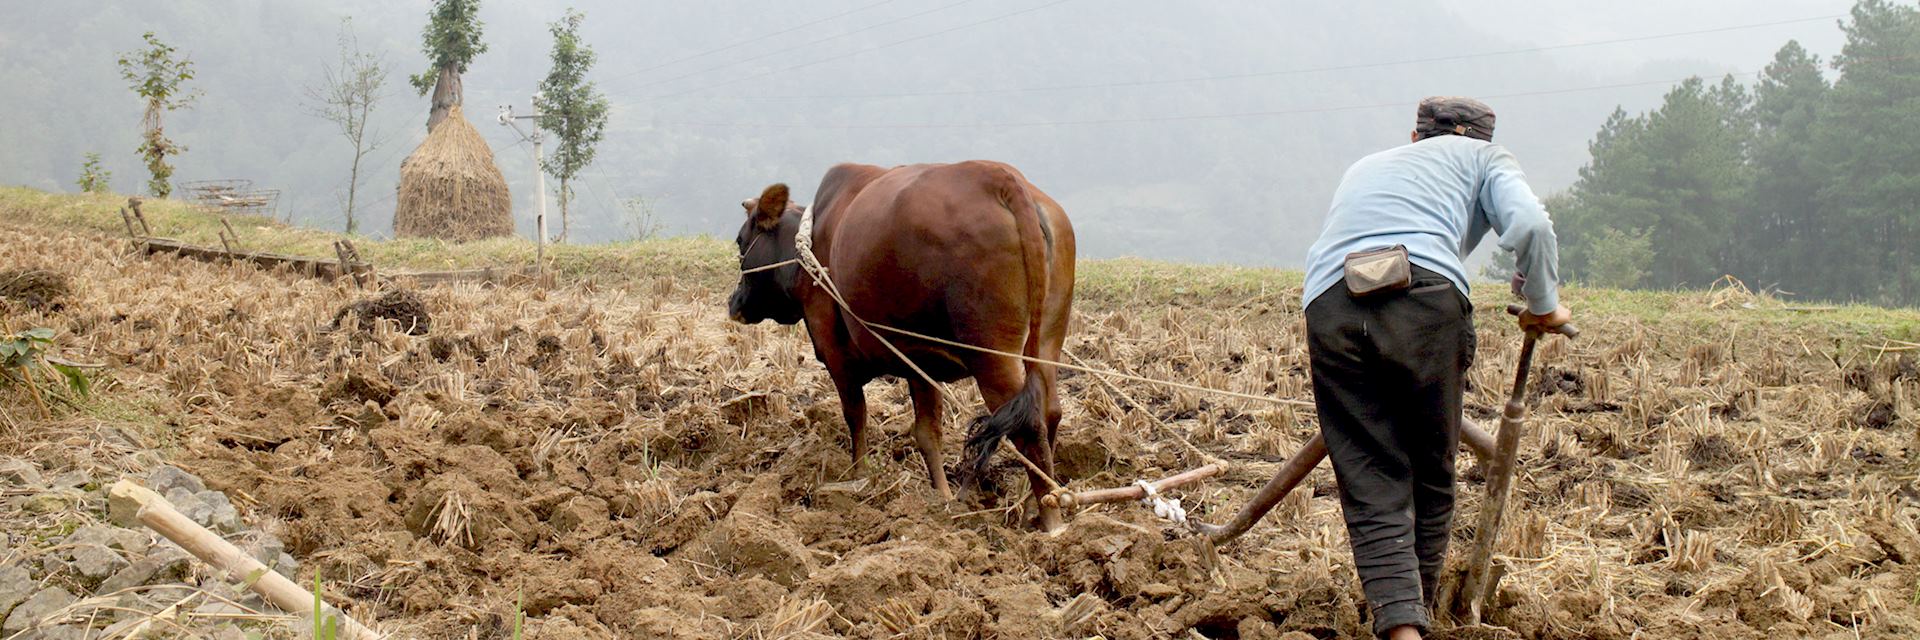 Back to basics with a buffalo and hand pushed plough in Wajiao village, Guizhou province